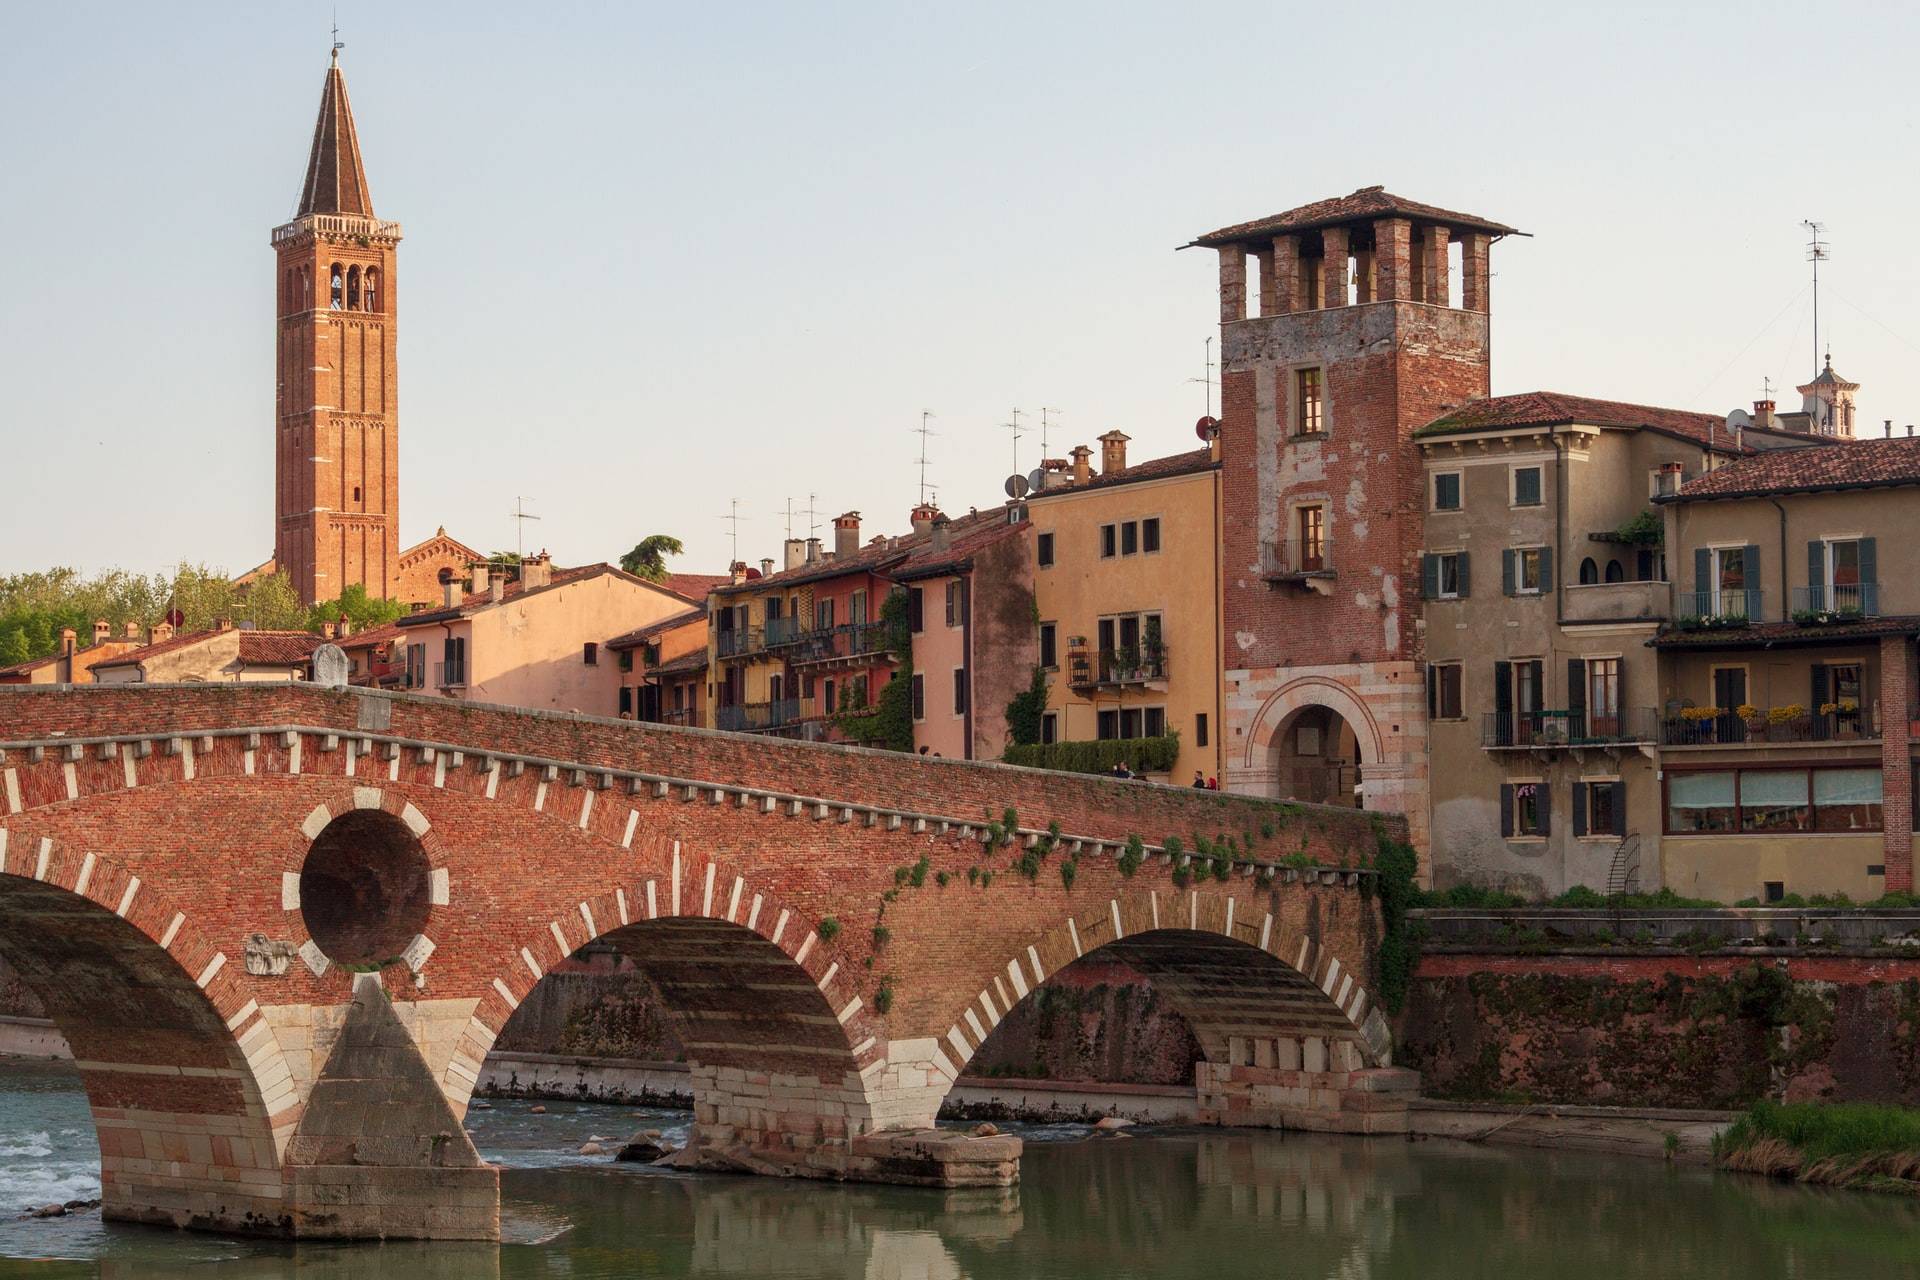 Must visit Verona